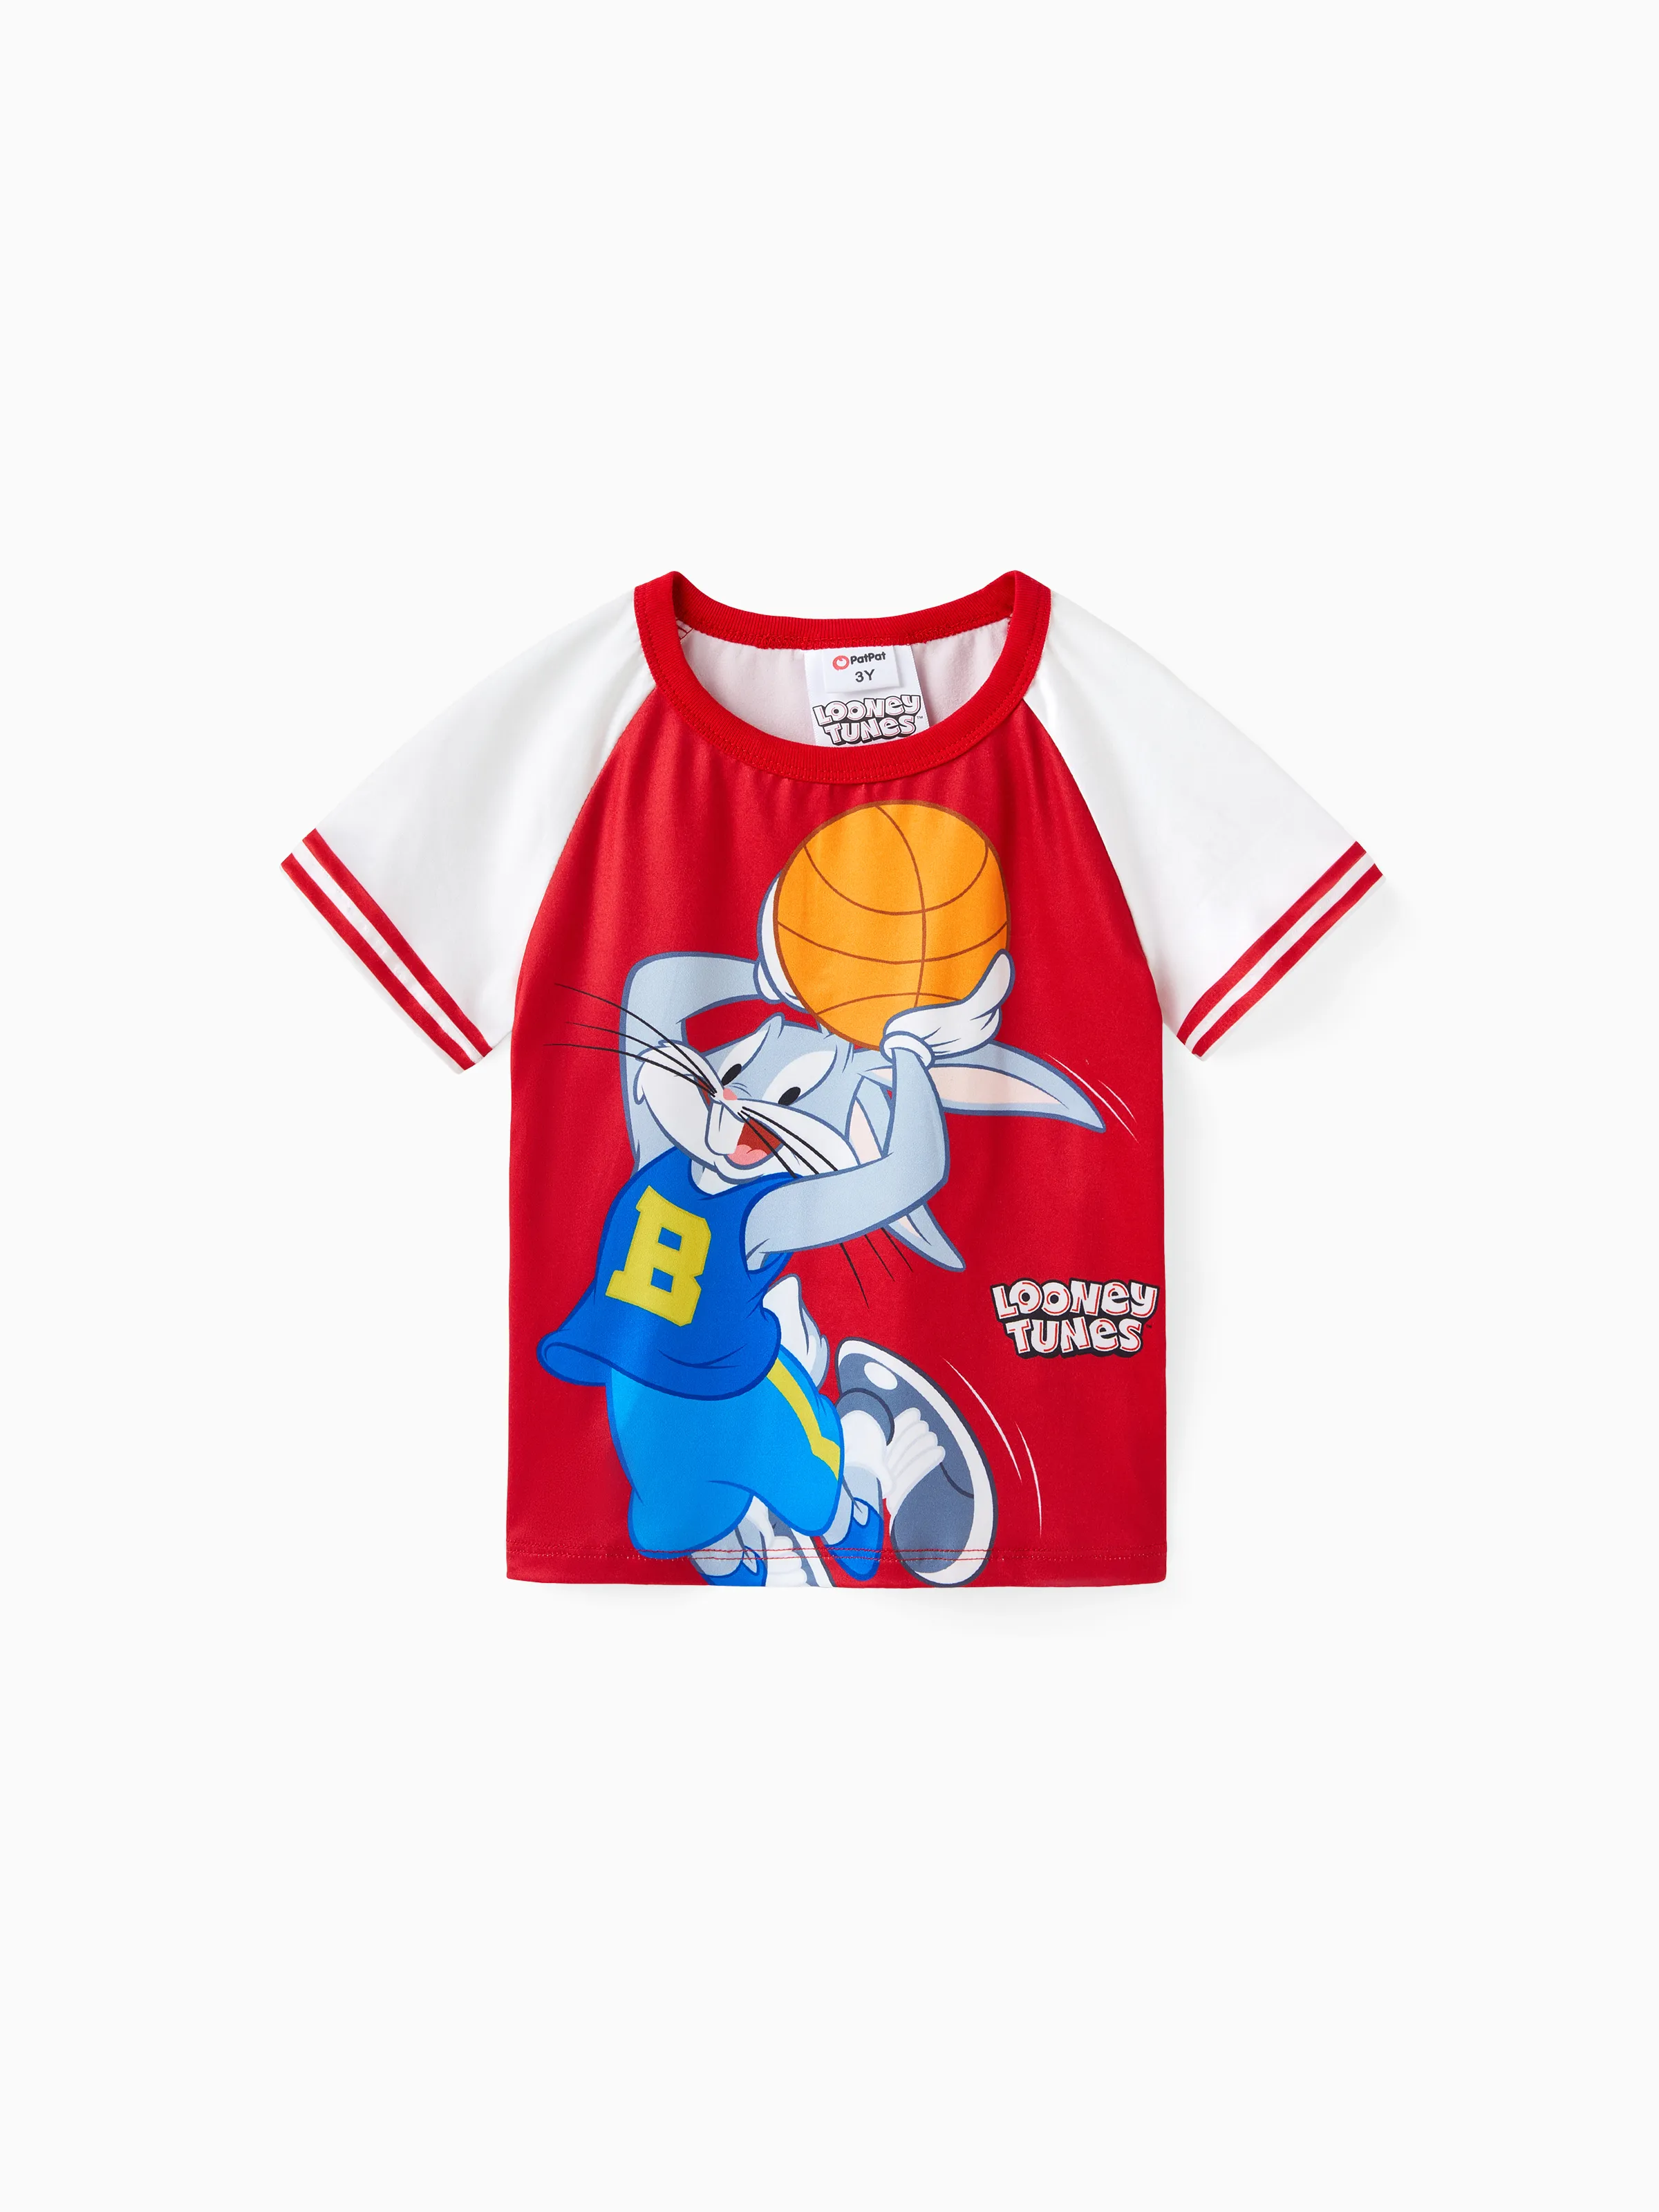 

Looney Tunes Kid/Toddler Boy Colorblock Basketball Sport T-Shirt